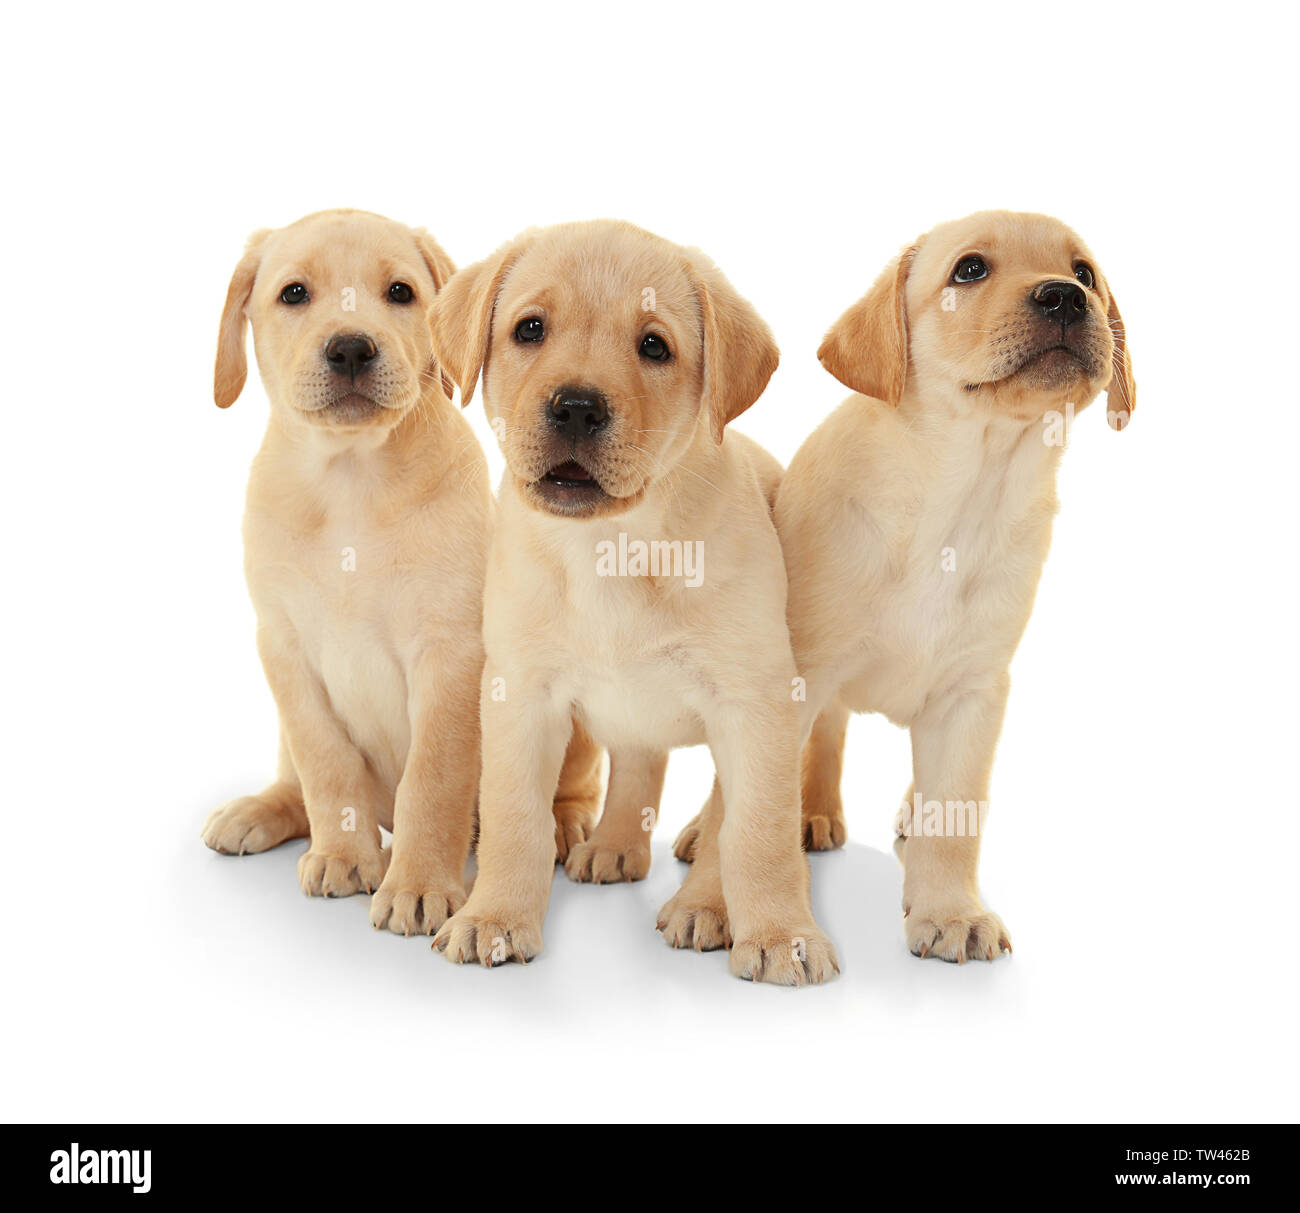 Cute labrador retriever puppies on white background Stock Photo - Alamy